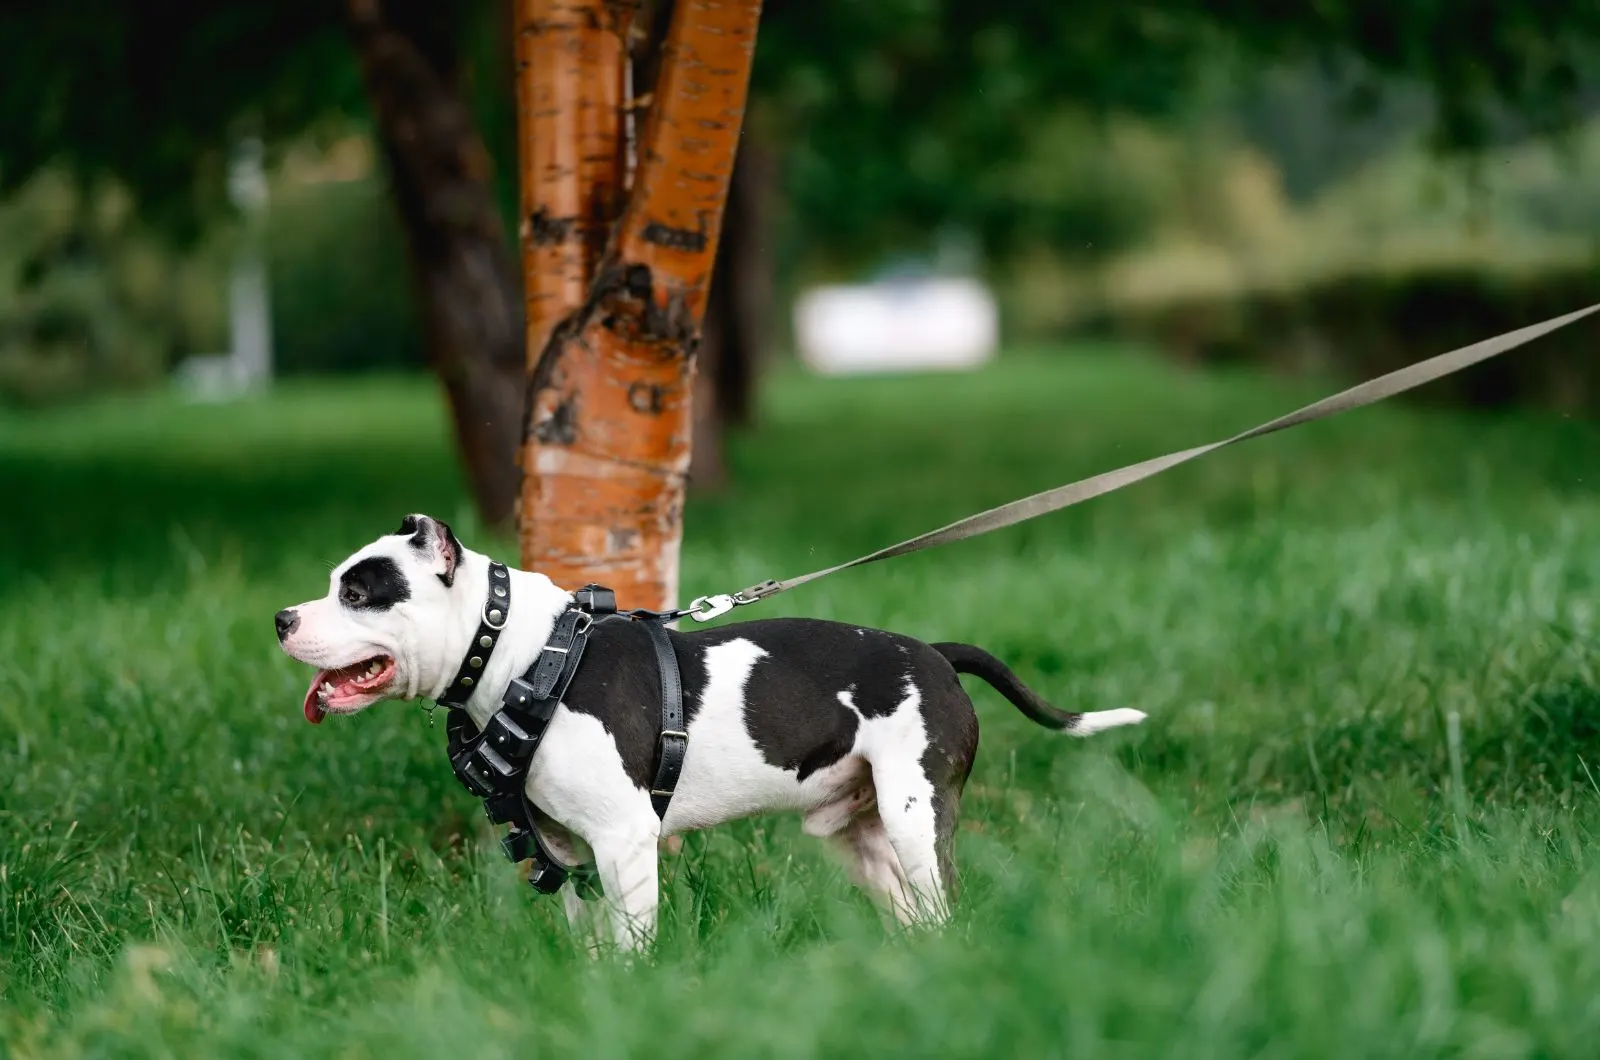 American Bulldog Pitbull Mix standing on grass